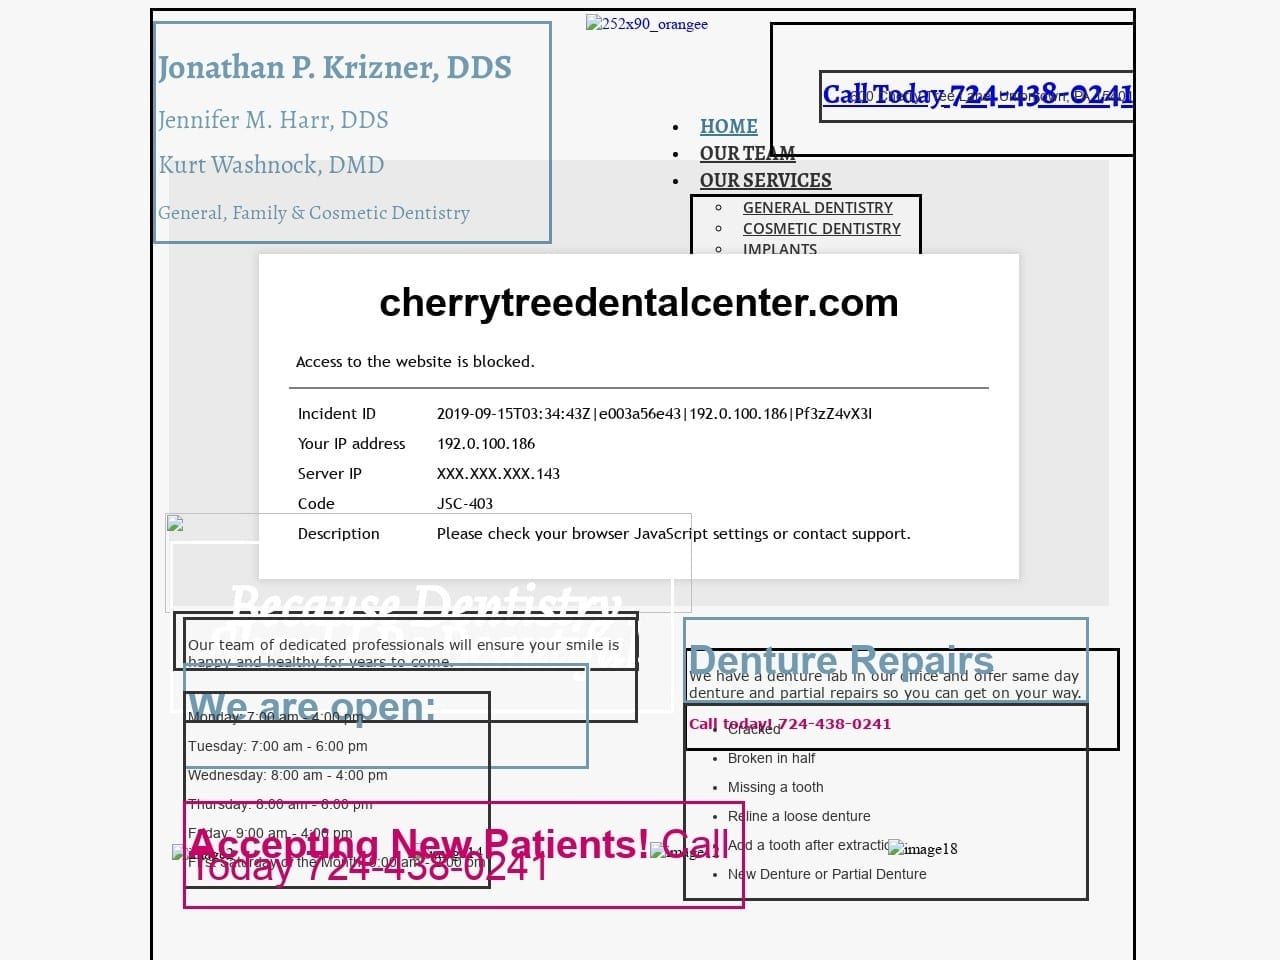 Jonathan Krizner DDS Website Screenshot from cherrytreedentalcenter.com